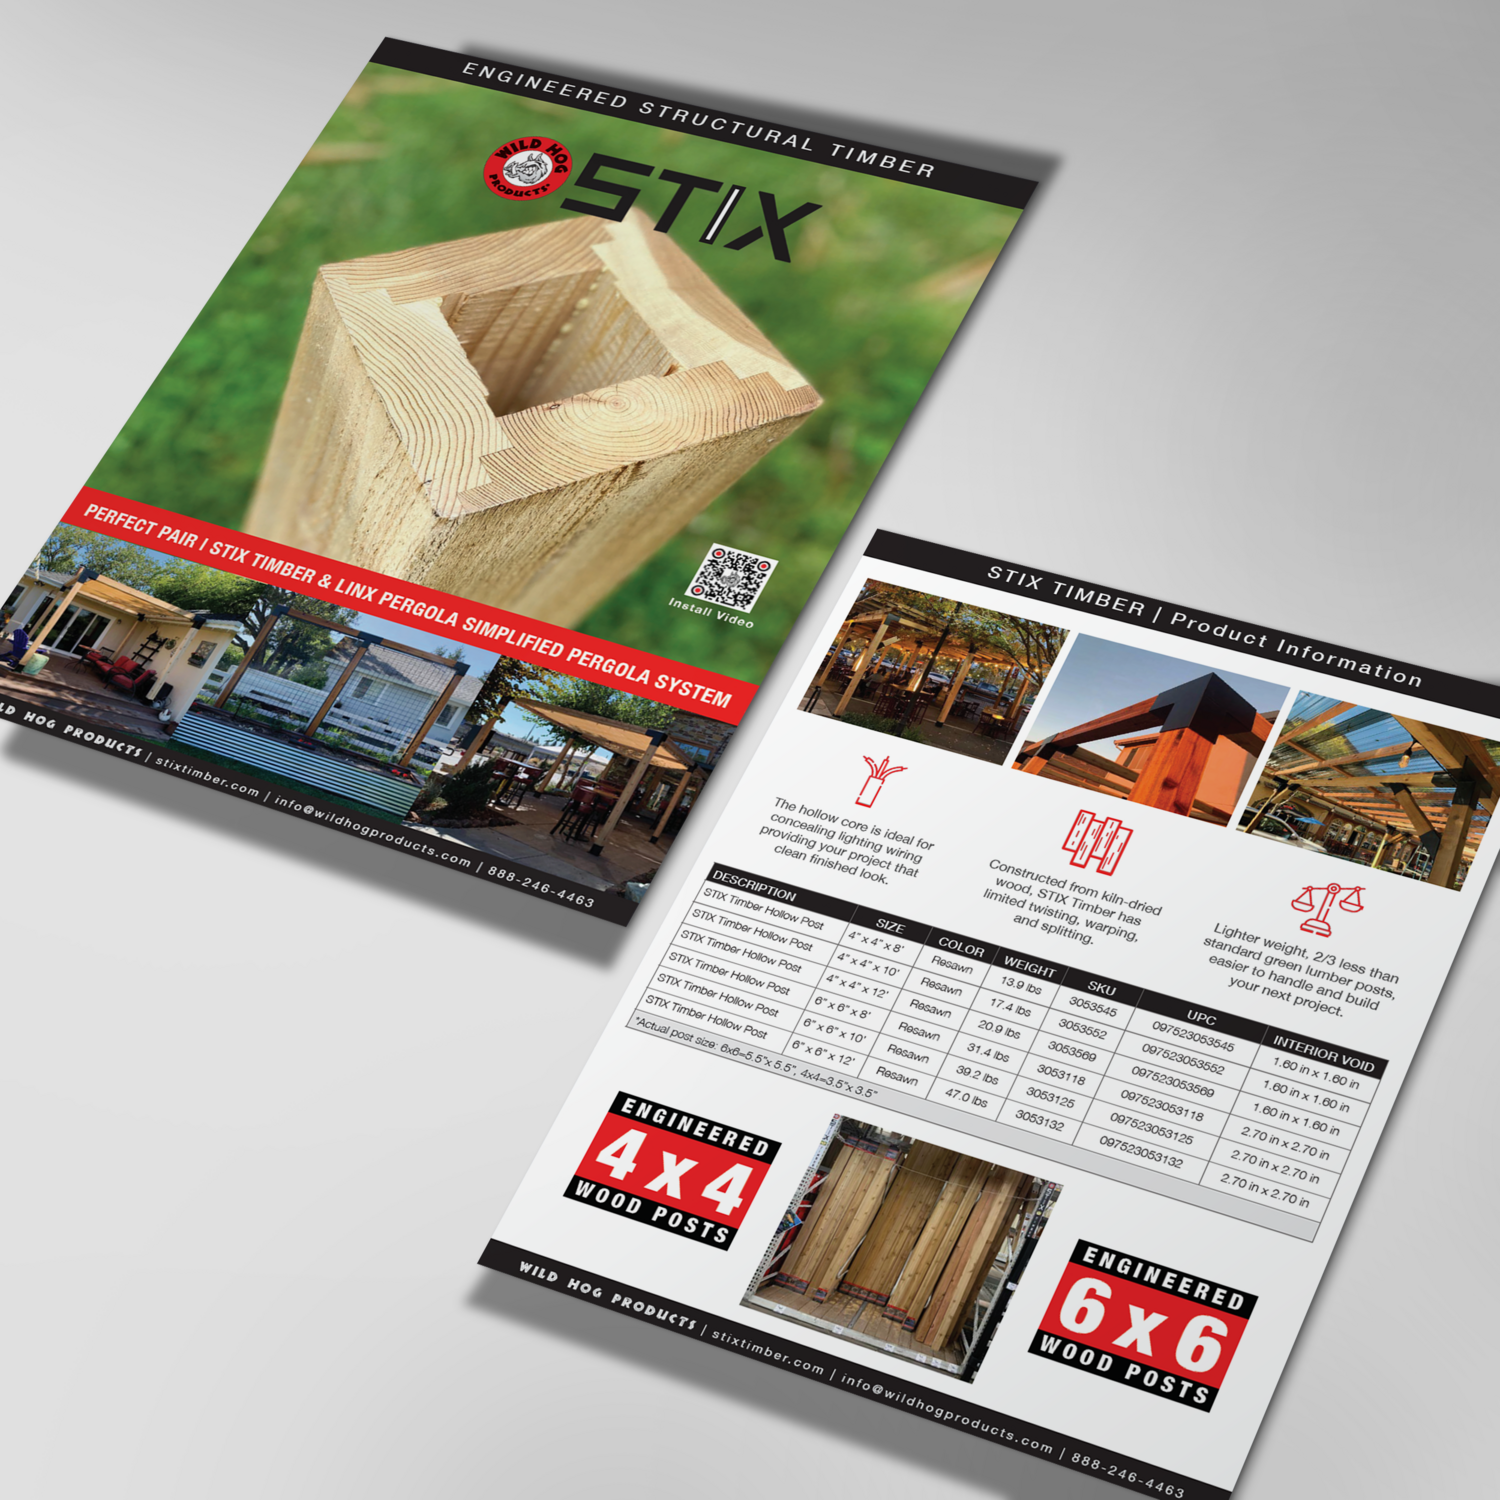 STIX Timber -Sales Sheet